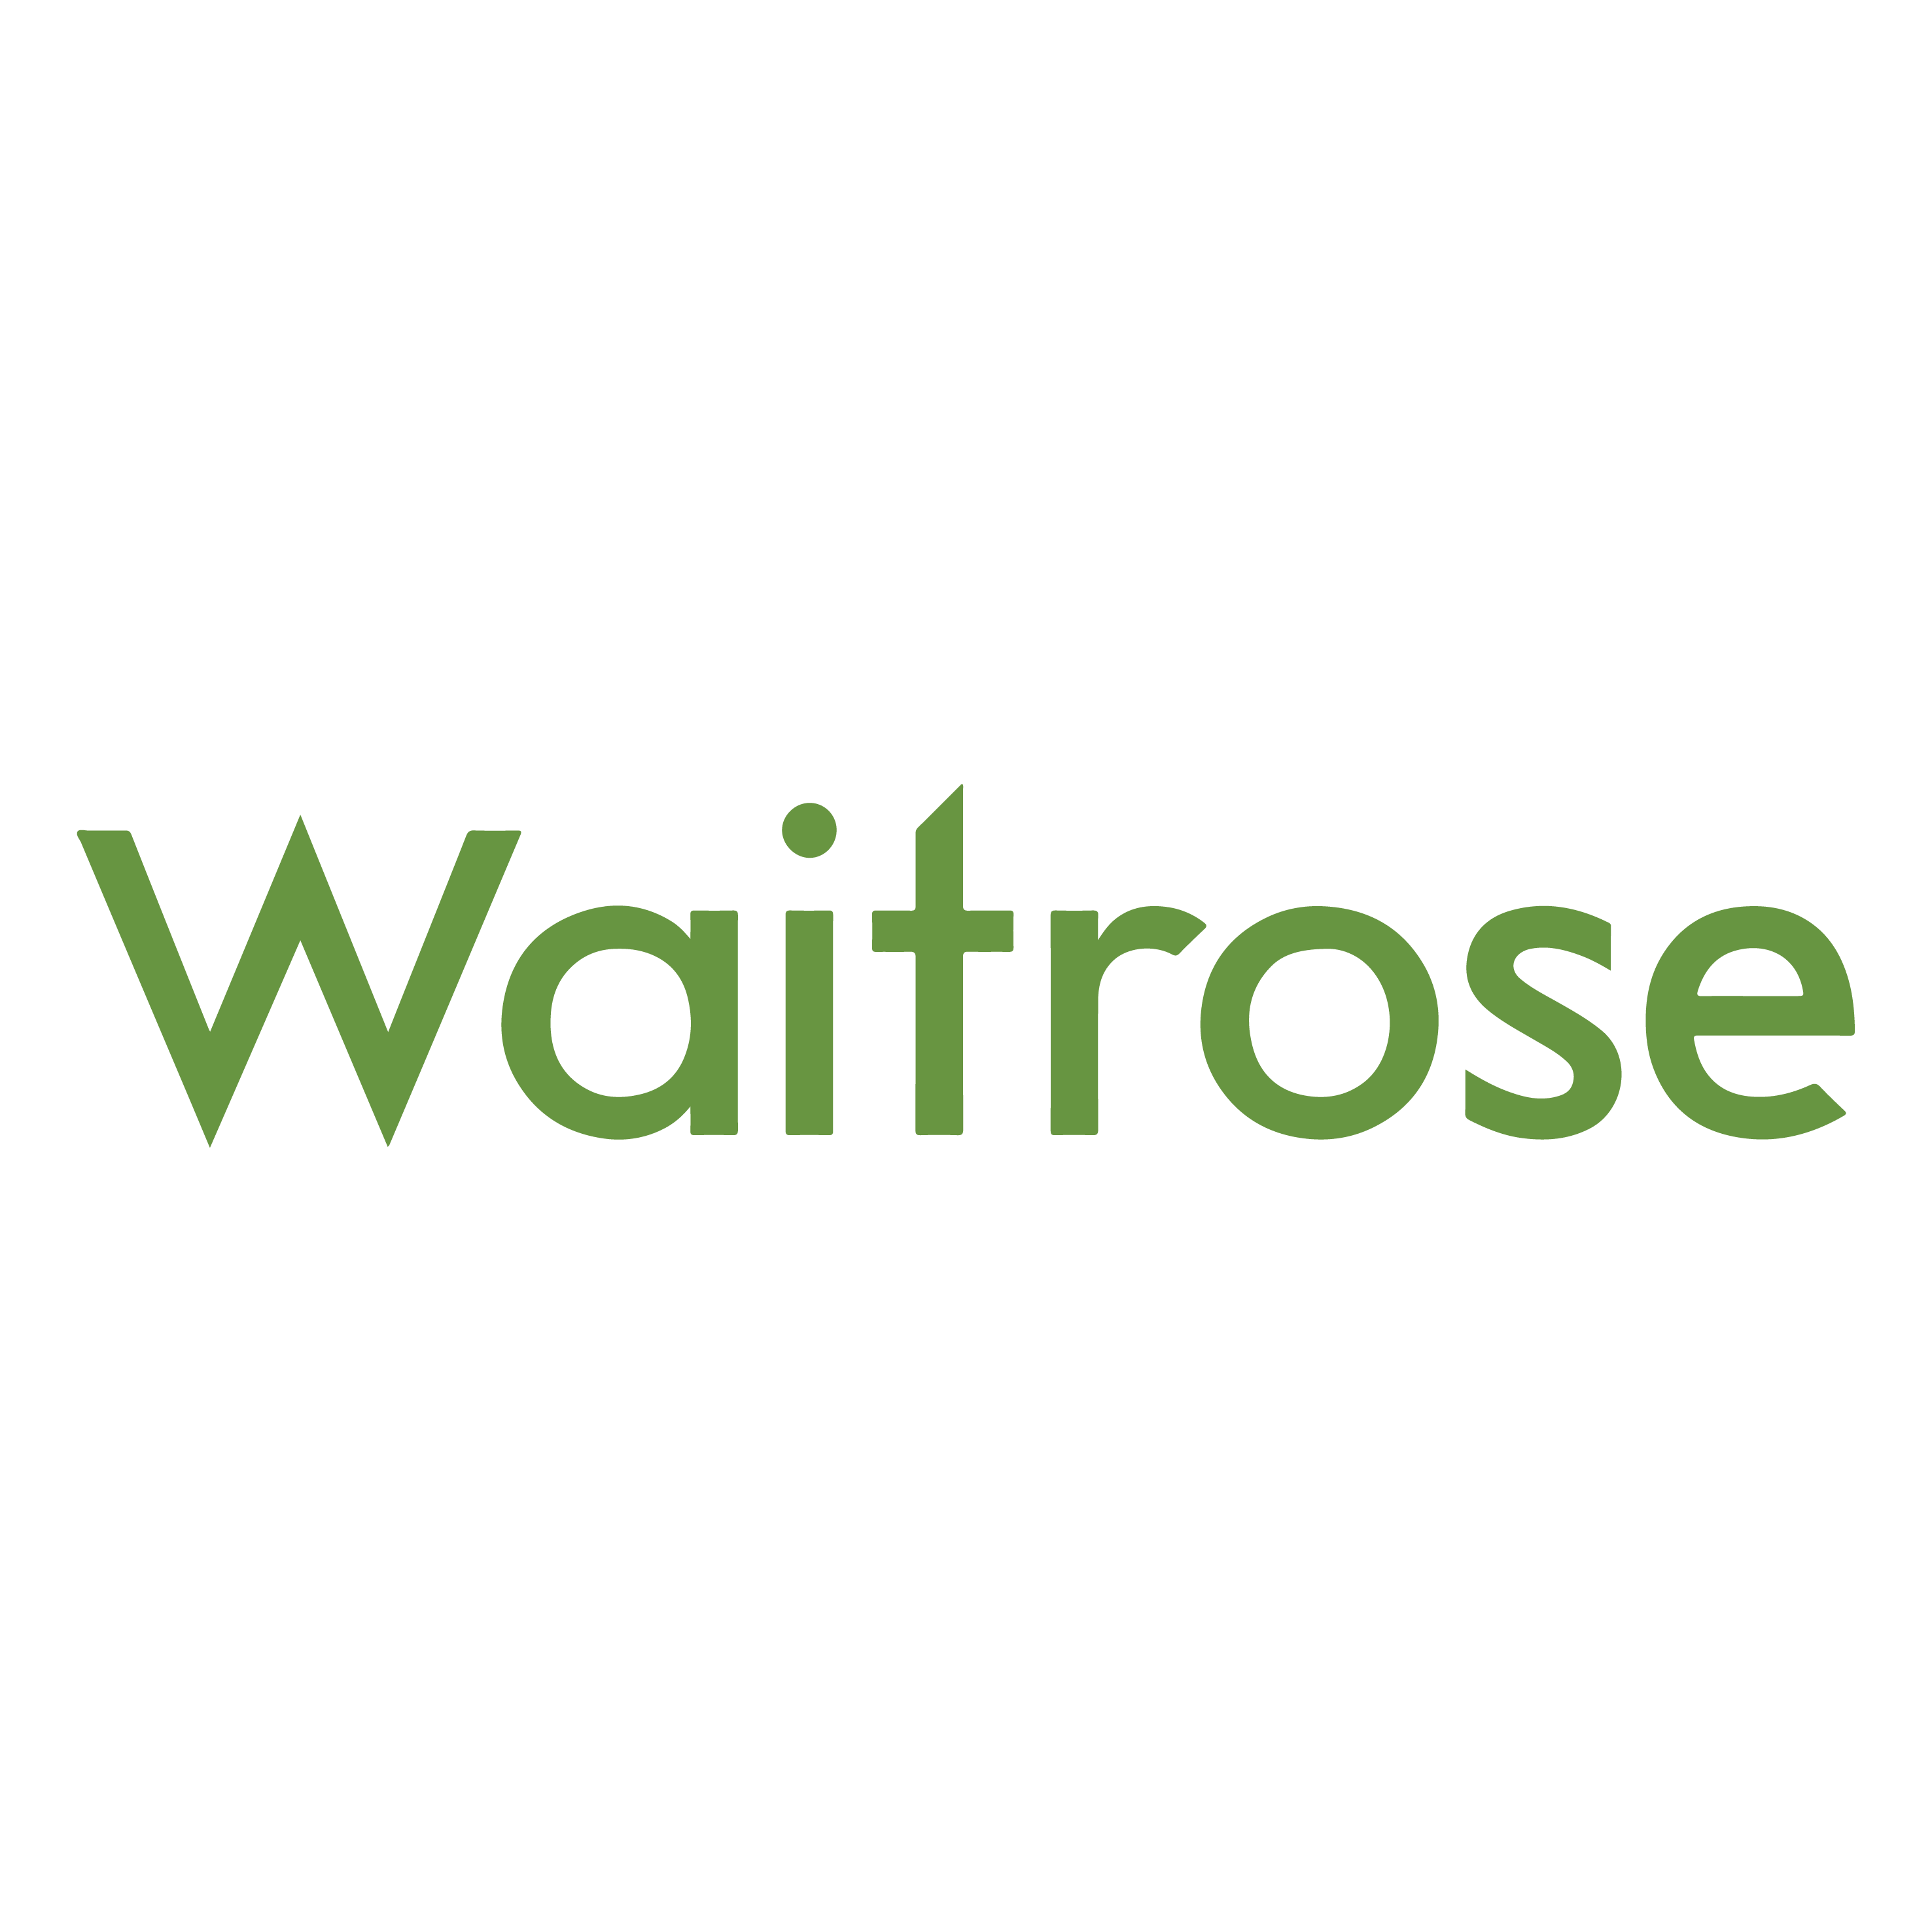 Waitrose-01